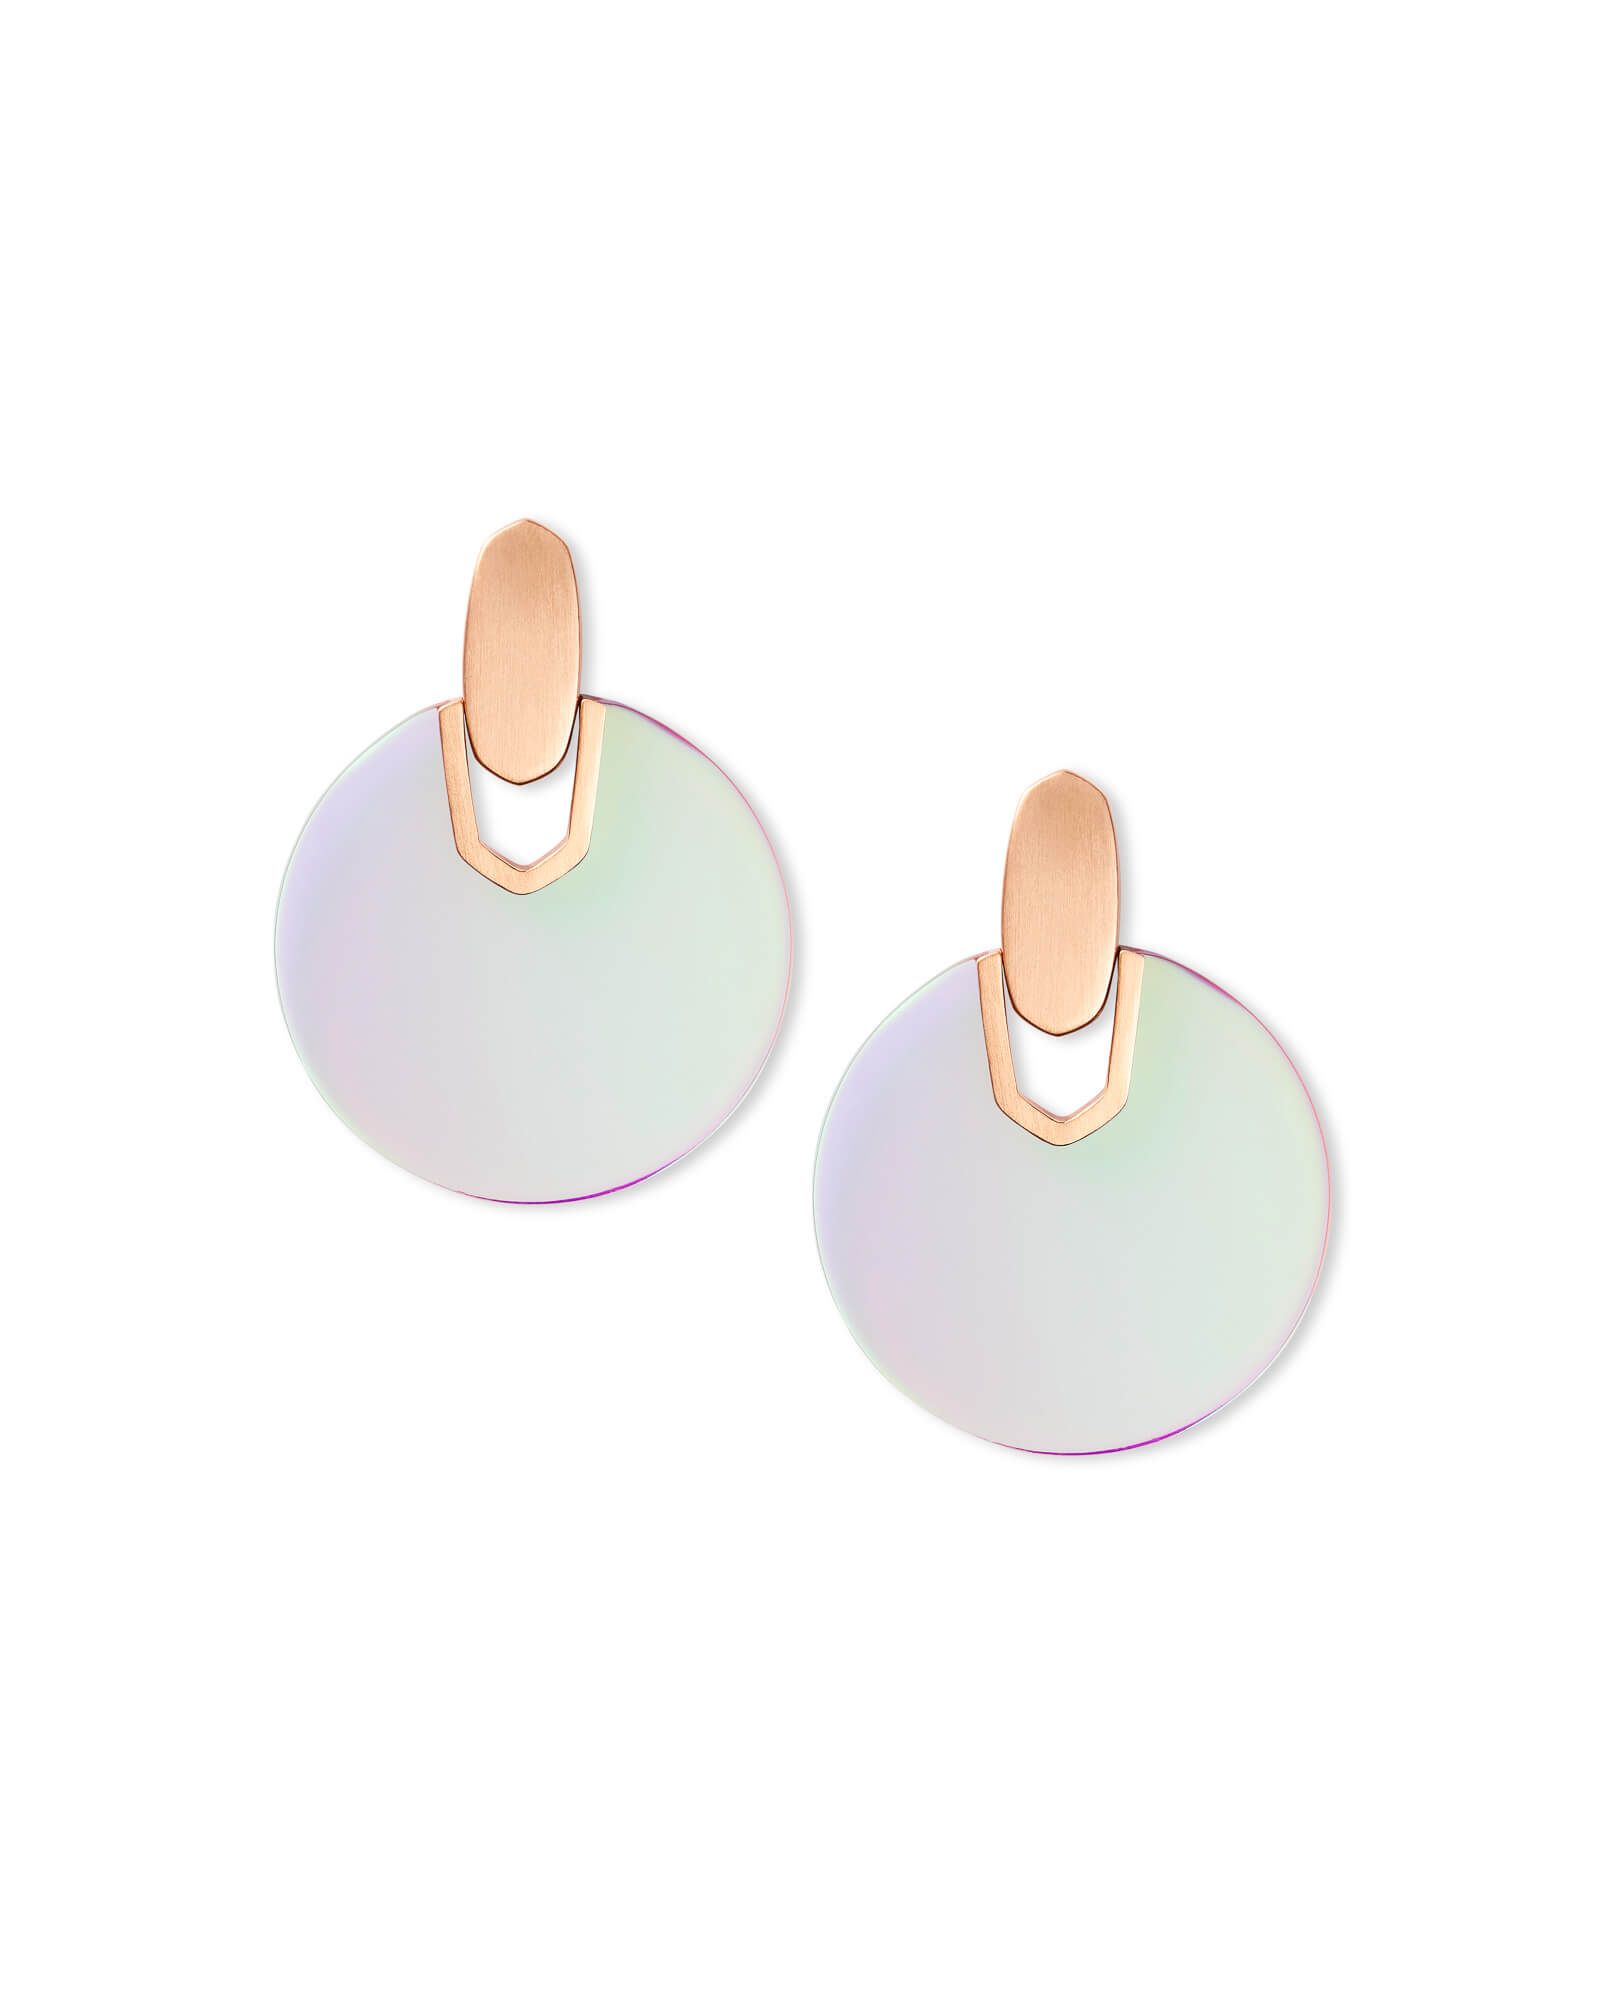 Didi Rose Gold Statement Earrings in Blush Dichroic Glass | Kendra Scott